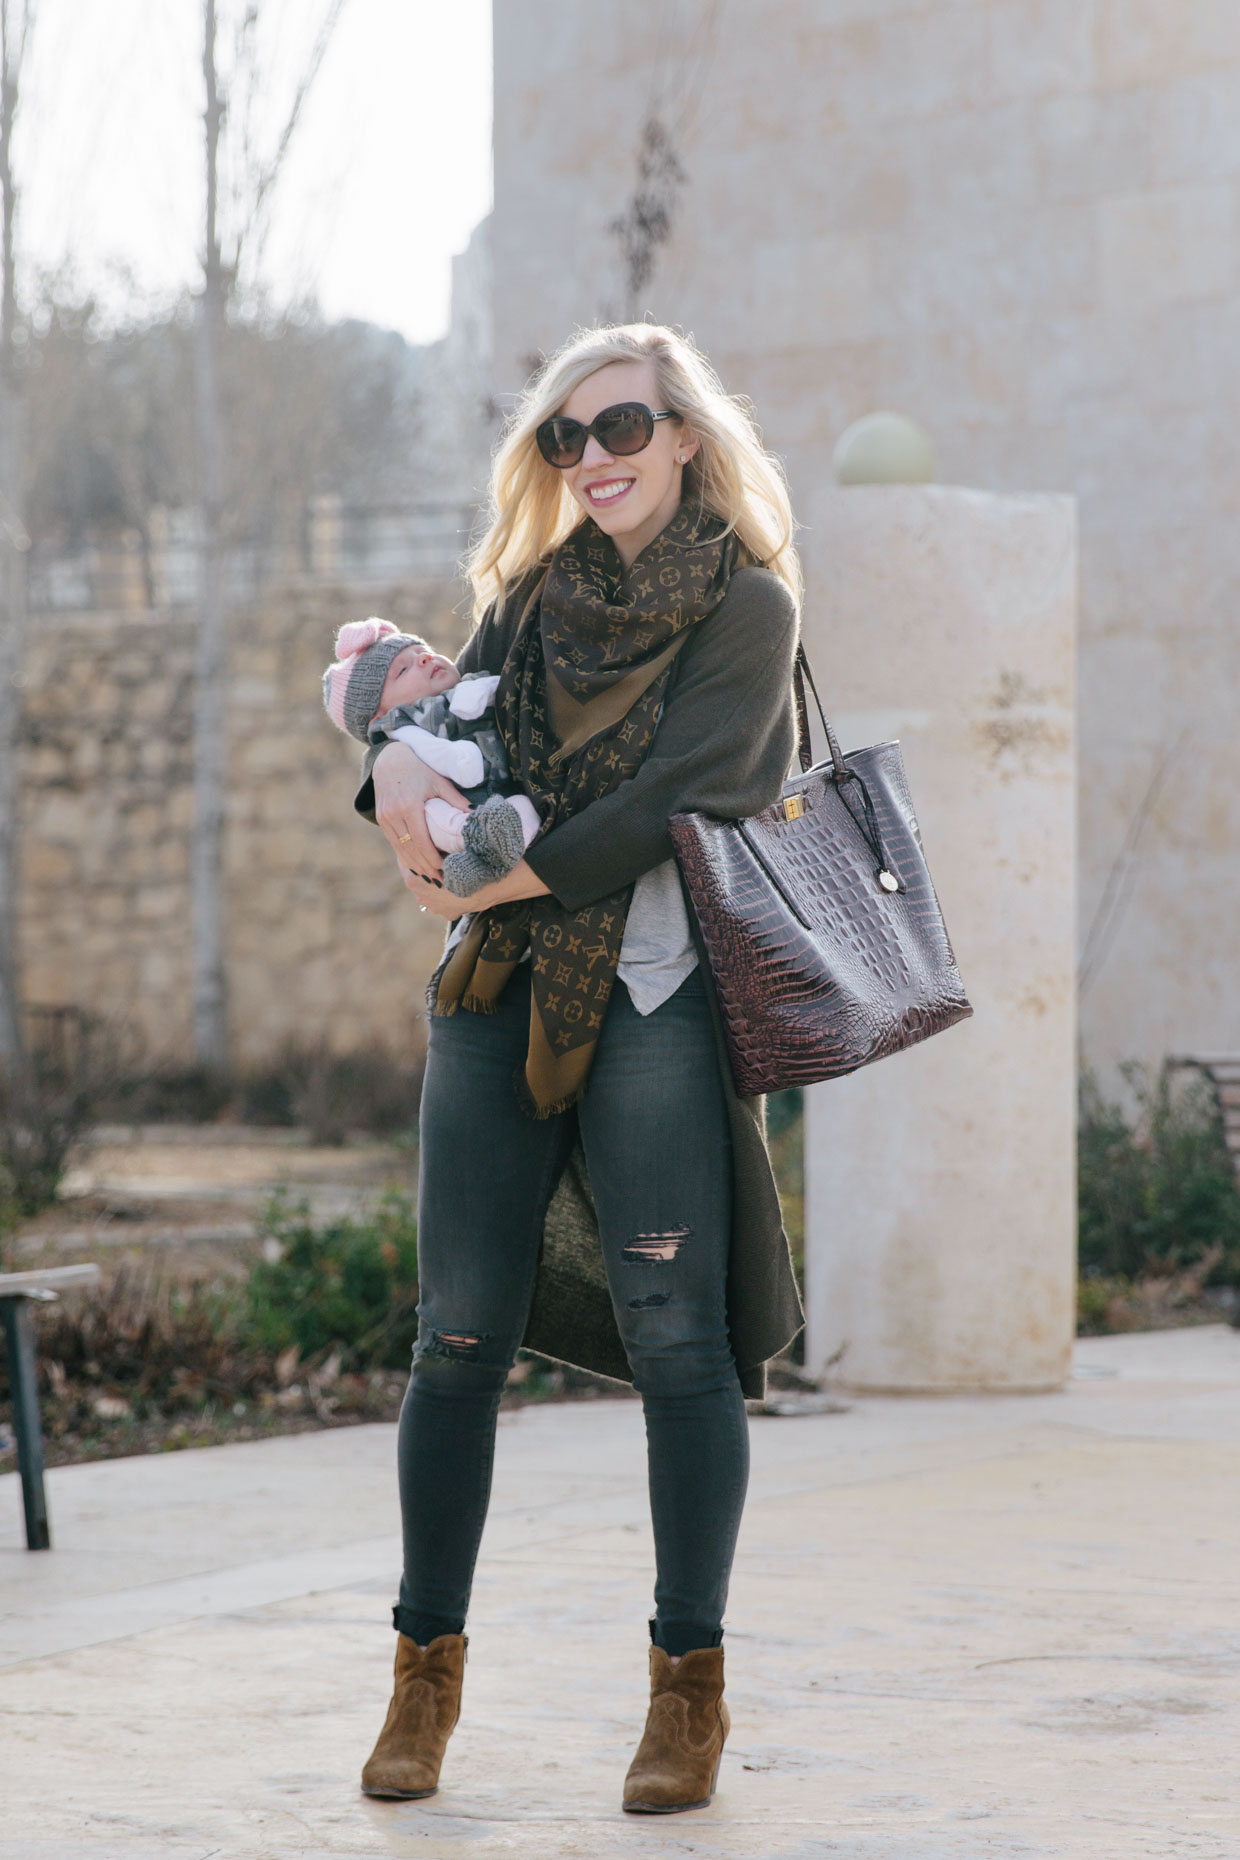 My Go-To Mom Style & Life with a Newborn - Meagan's Moda